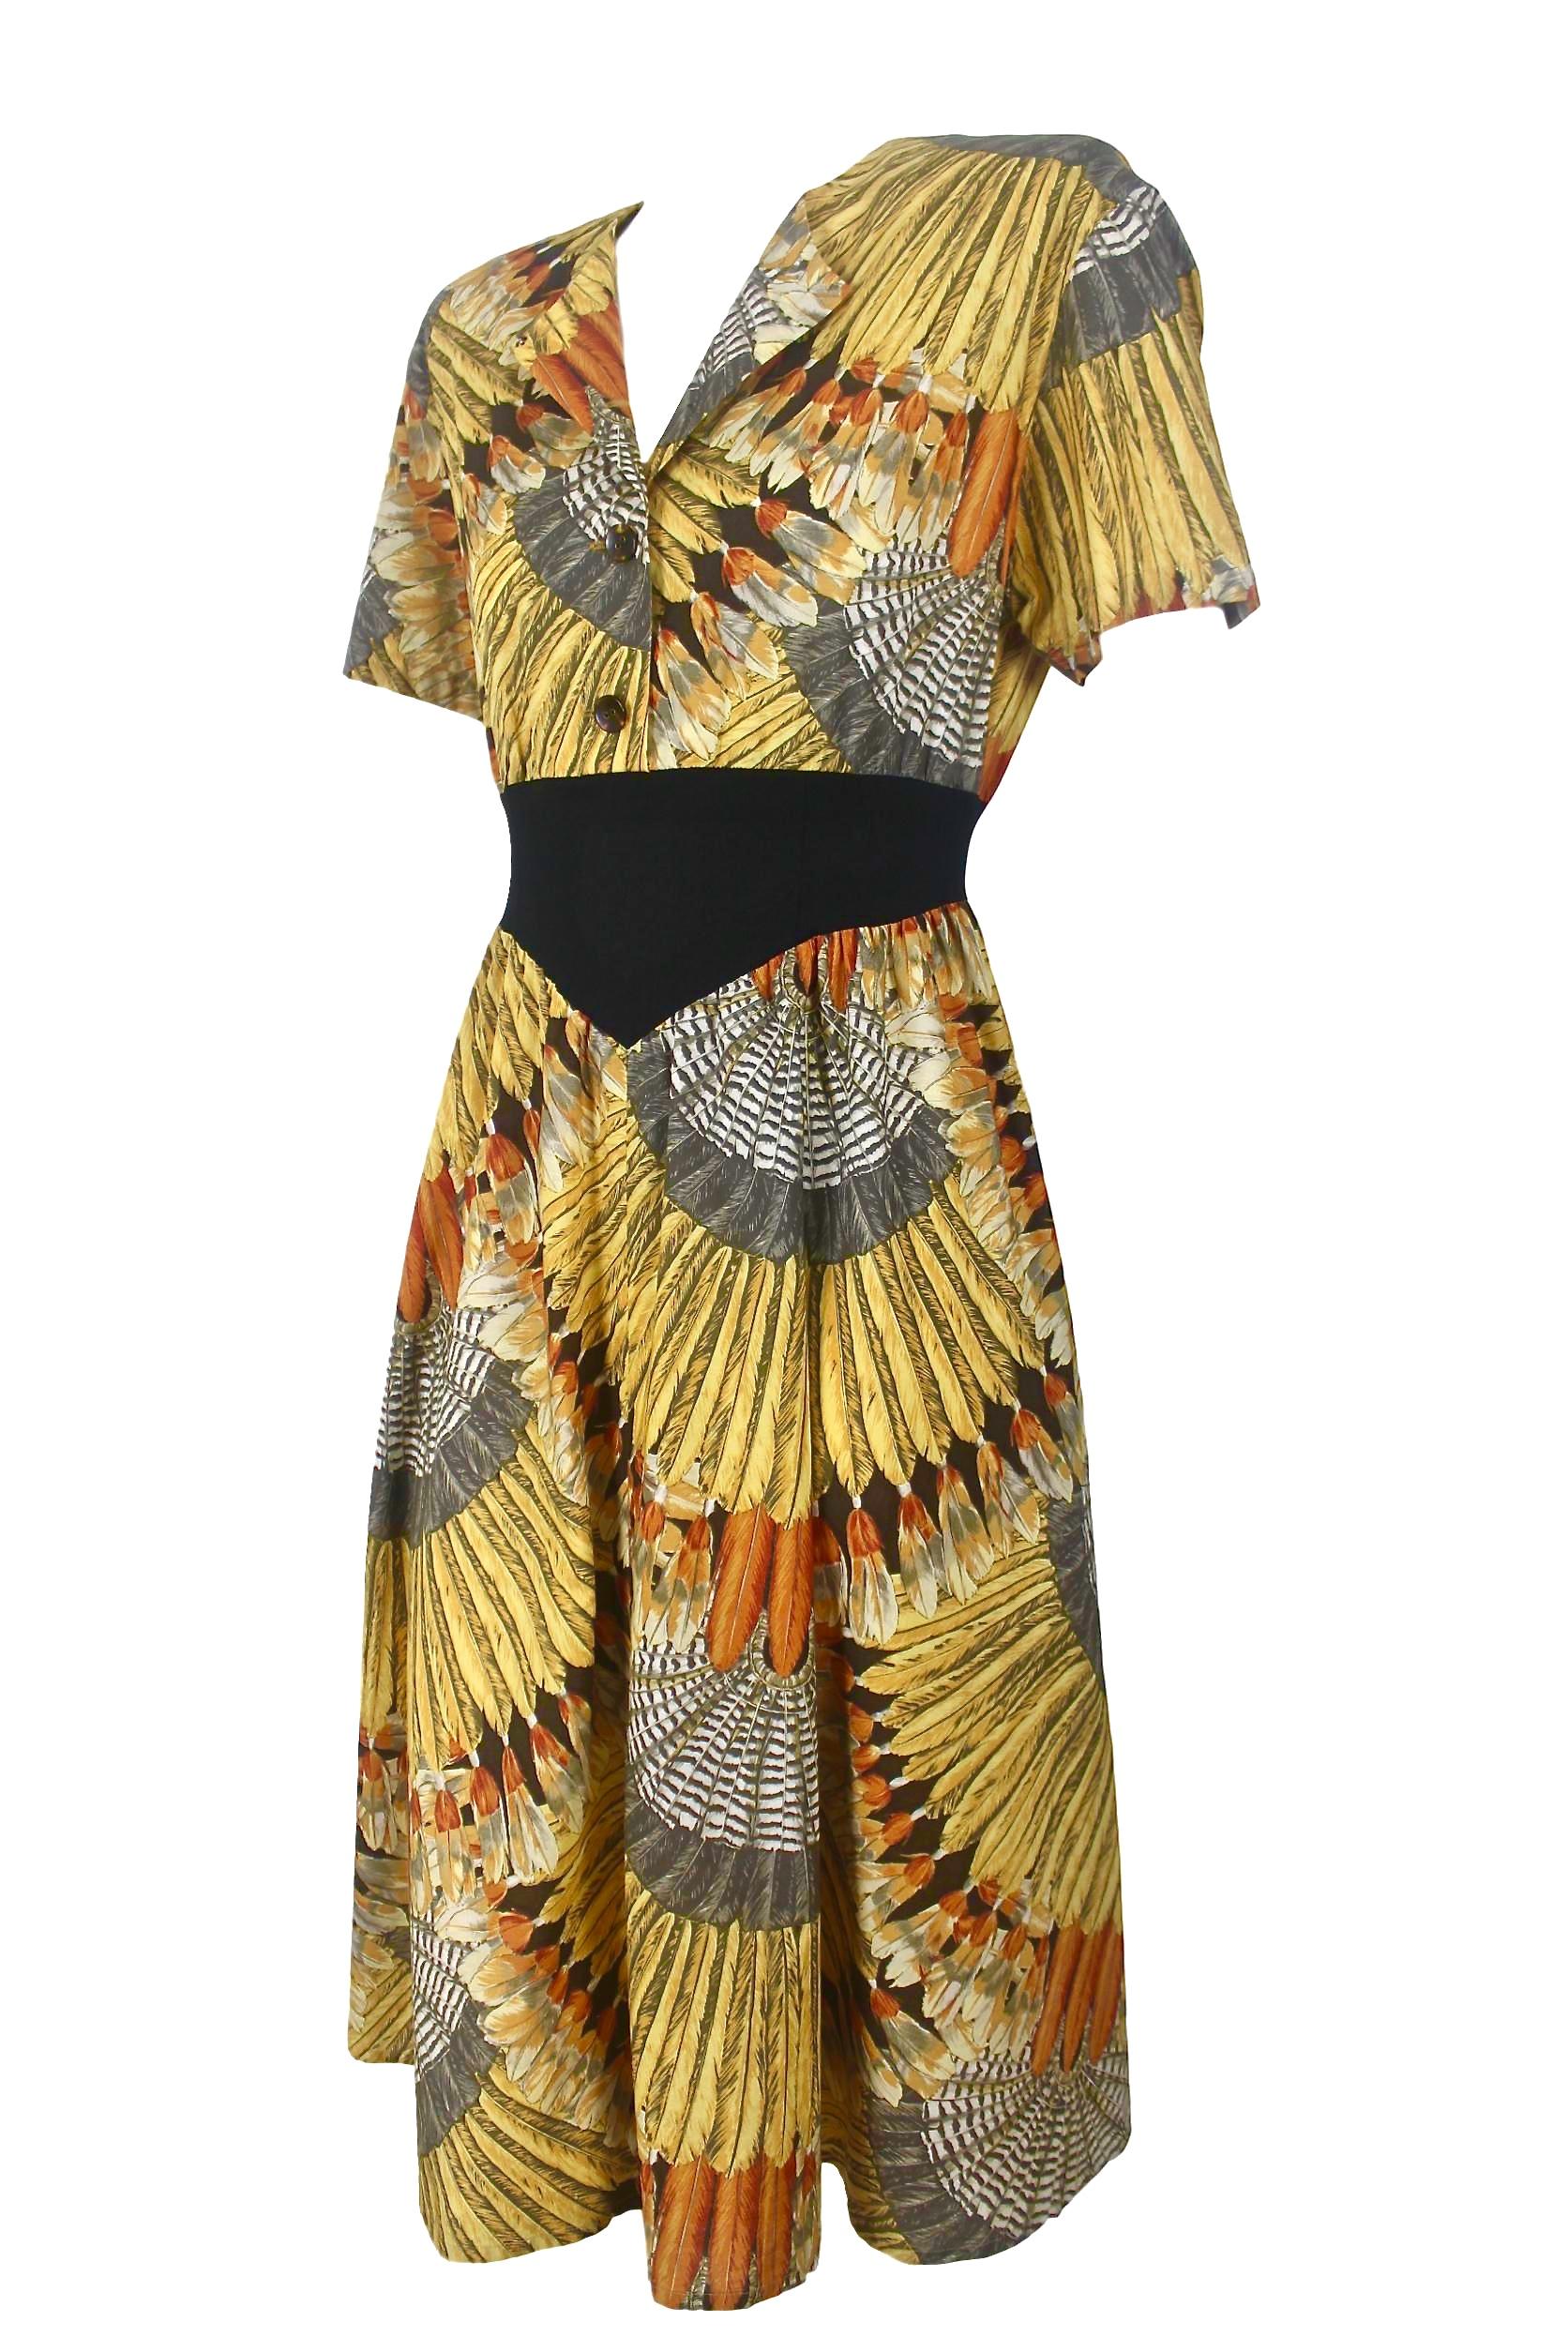 Women's Sorelle Fontana Feather Print Dress For Sale